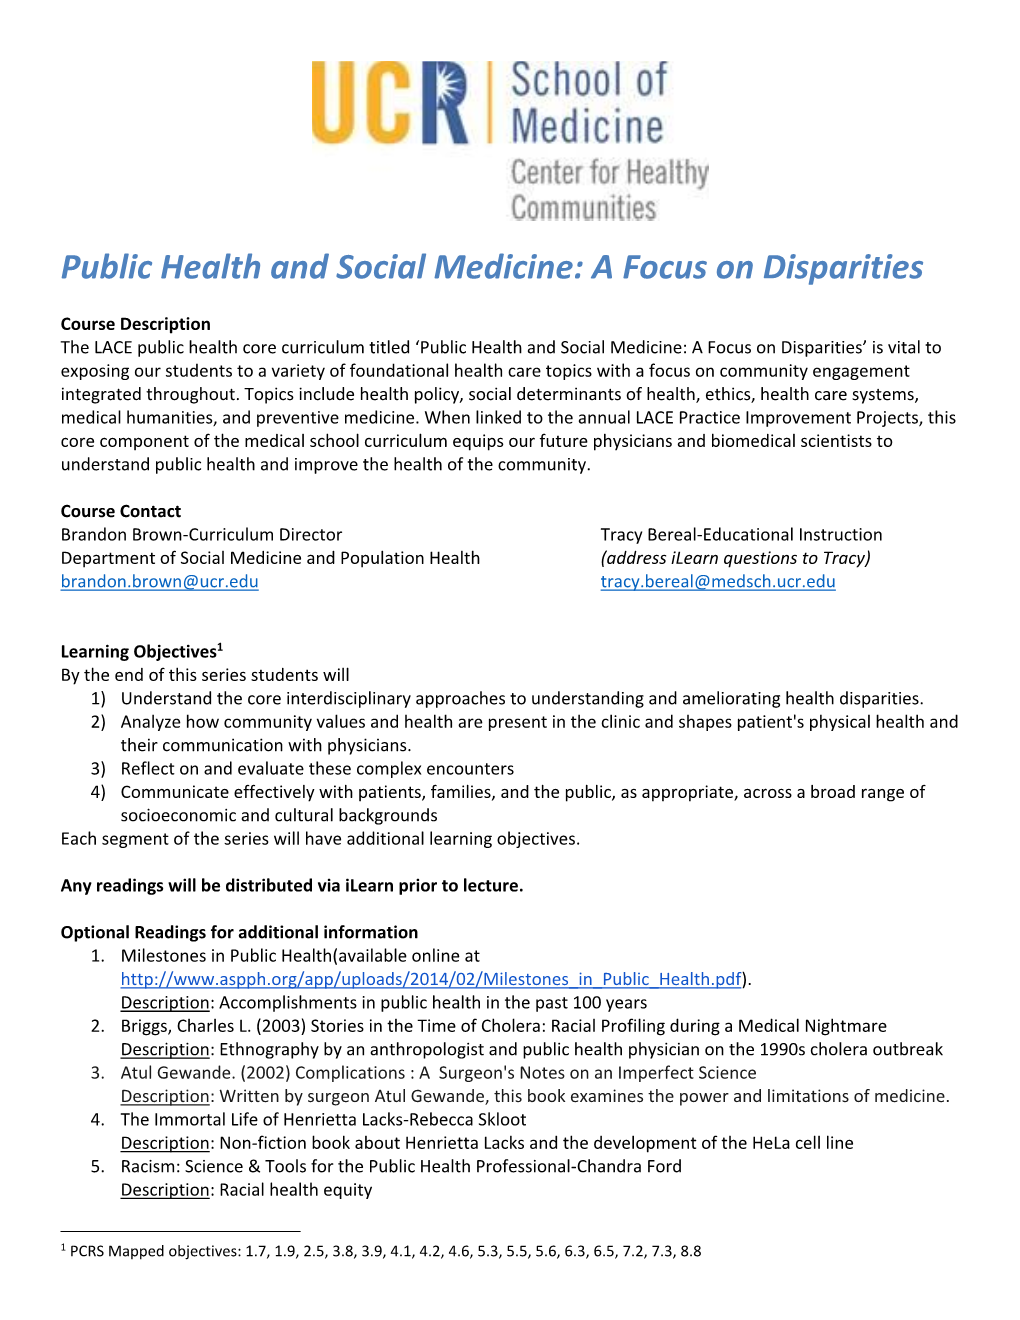 Public Health and Social Medicine: a Focus on Disparities